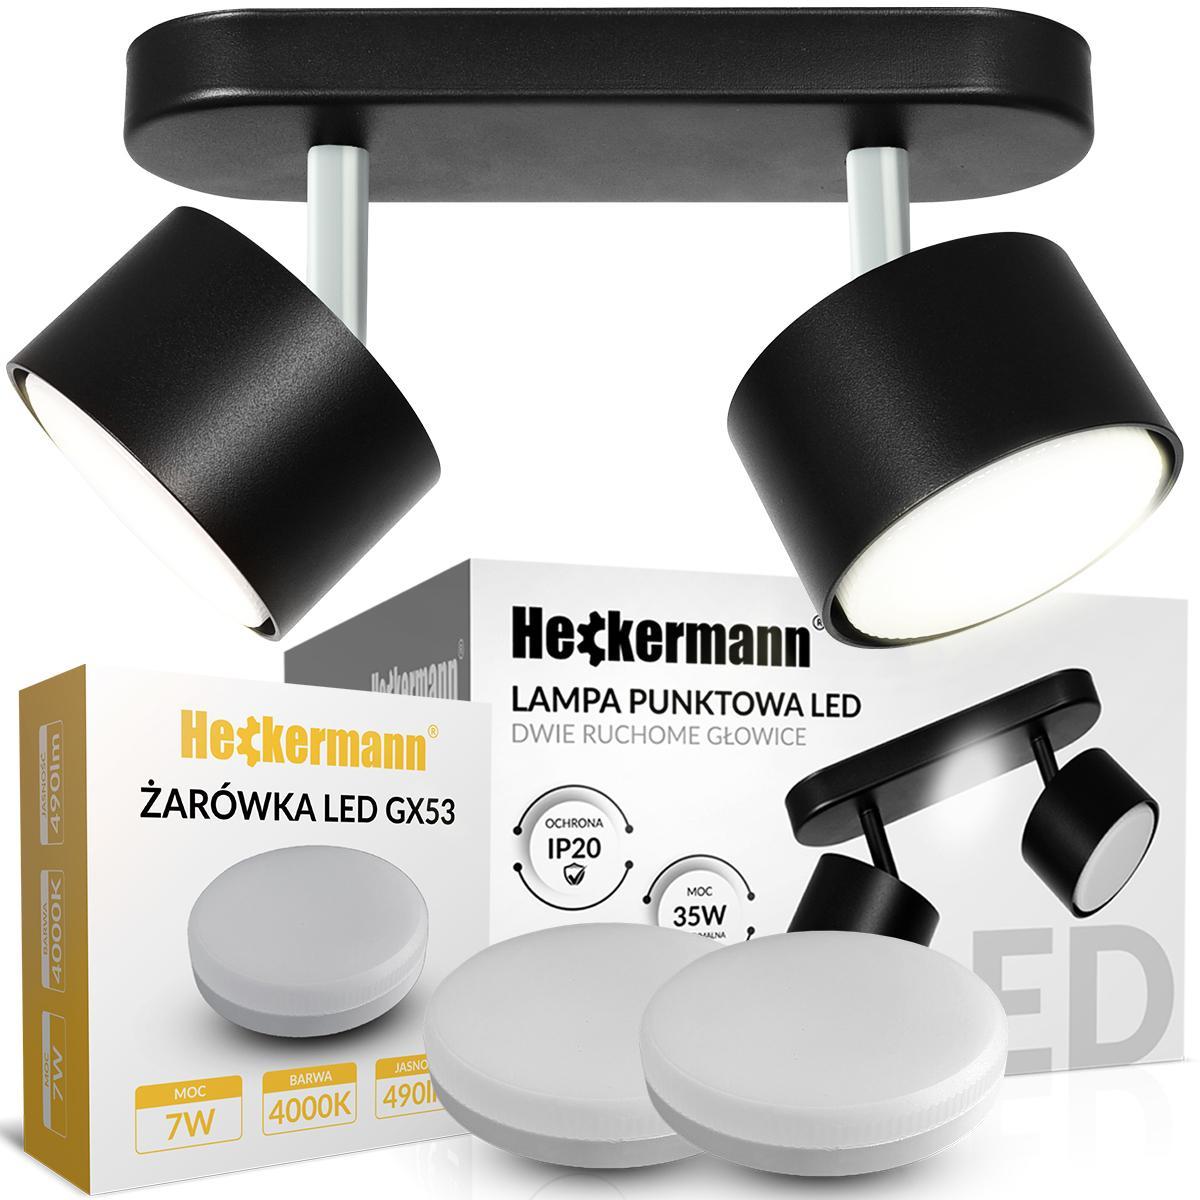 Lampa sufitowa punktowa LED Heckermann 8795314A Czarna 2x głowica + 2x Żarówka LED GX53 7W Neutral 0 Full Screen